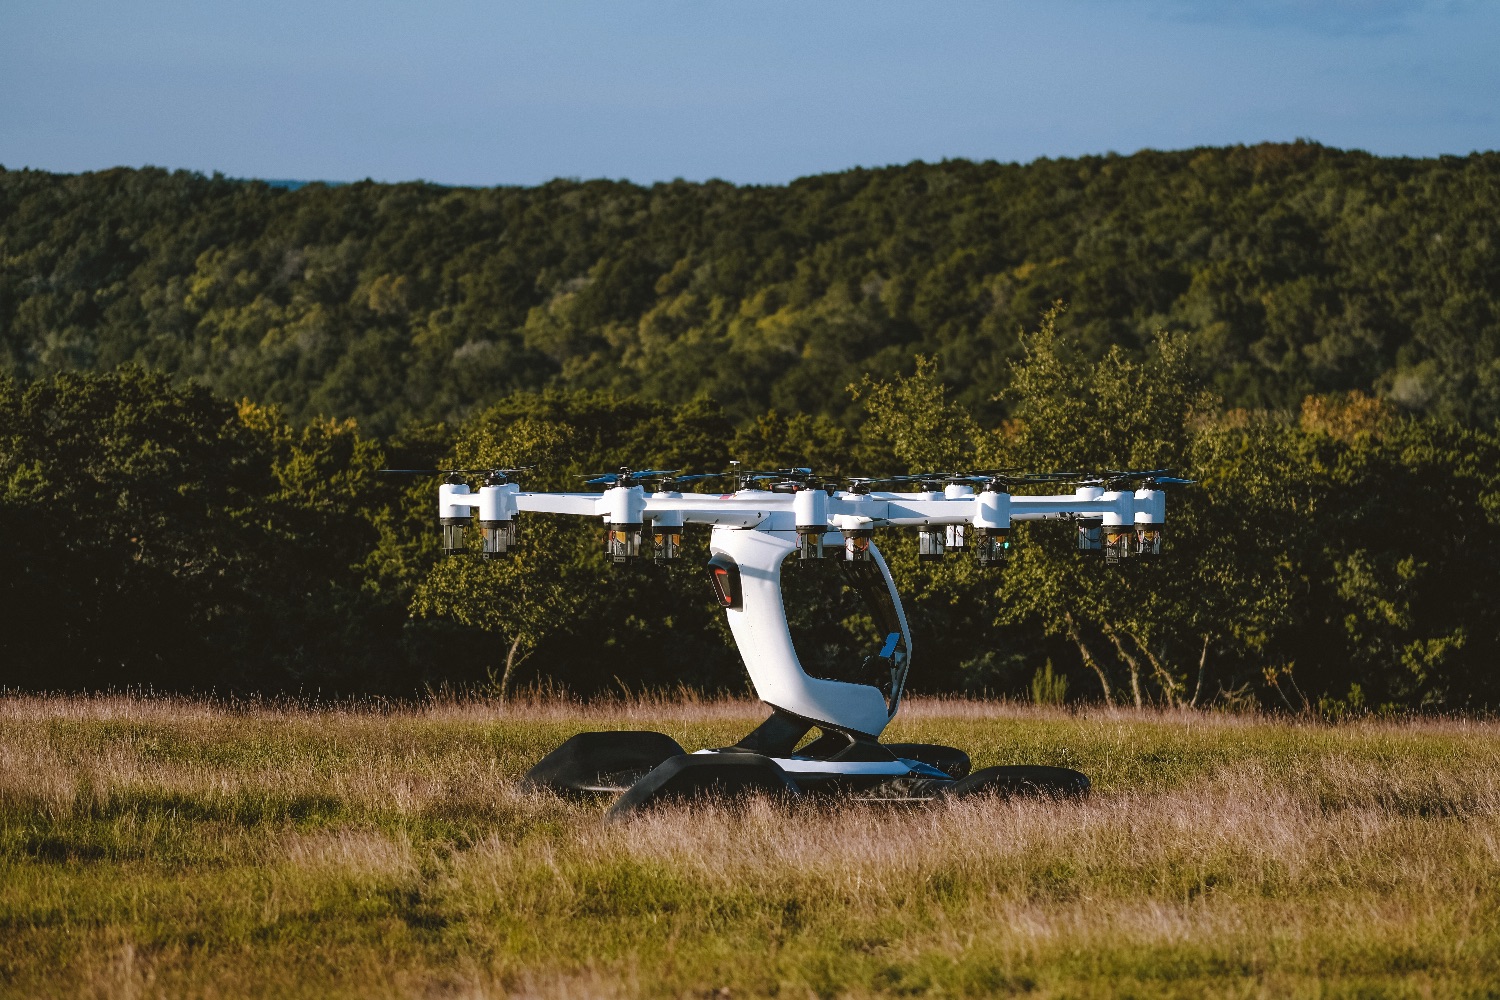 lift aircraft drone rides 2019 dscf1720